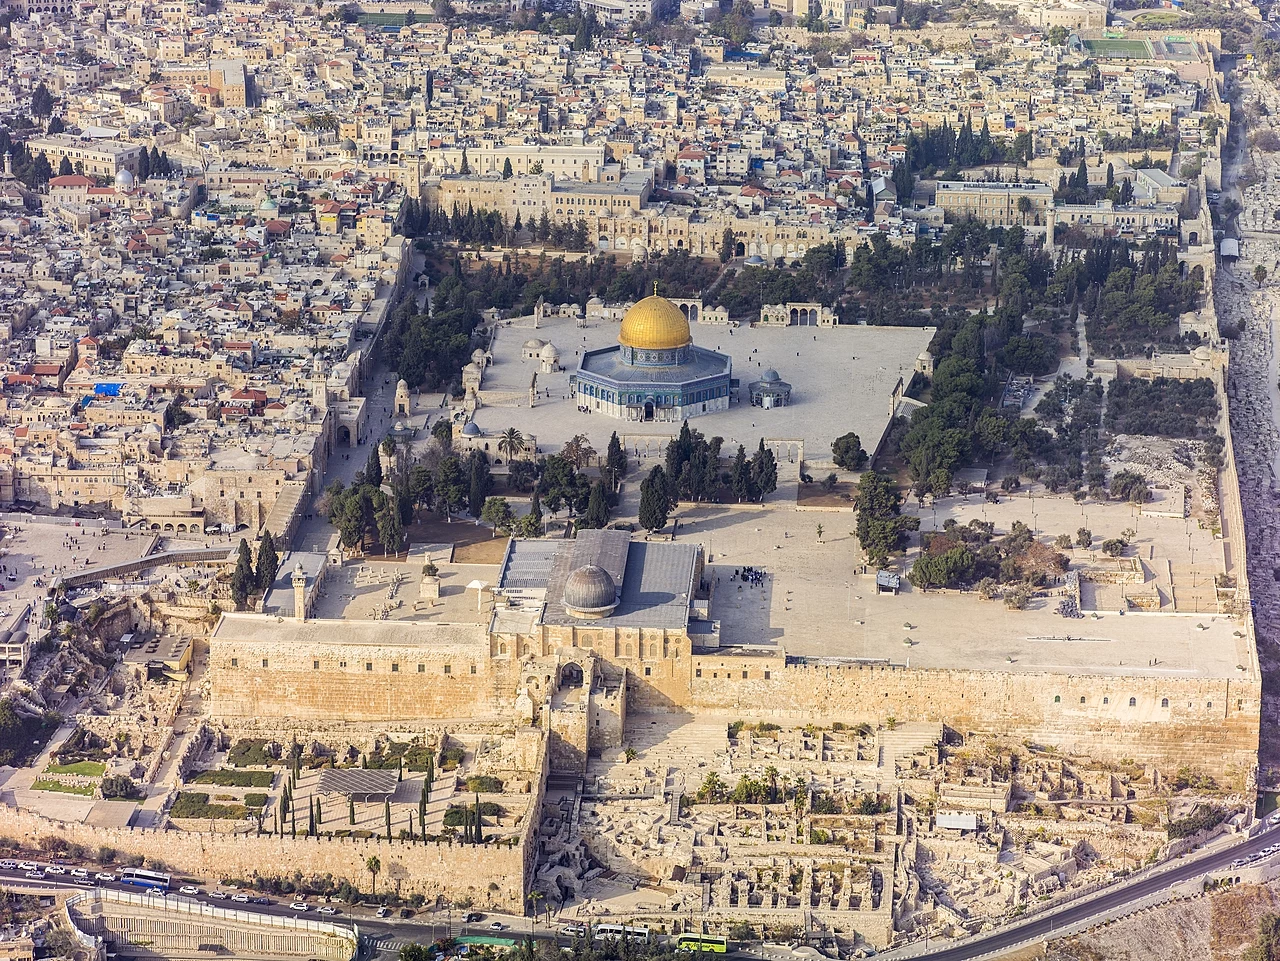 Al Aqsa Image Godot13 Wikimedia